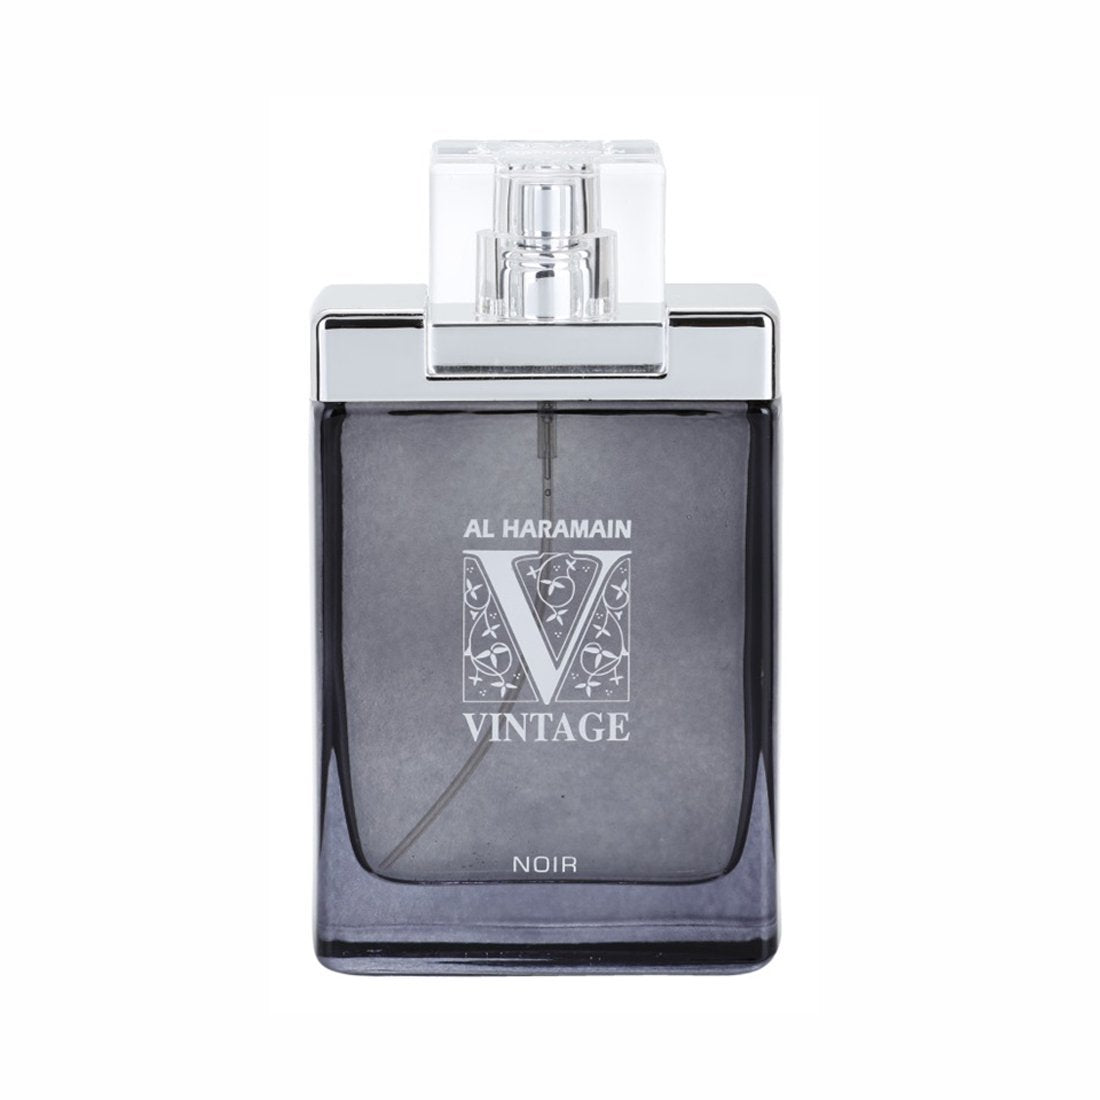 Al Haramain Vintage Noir Perfume for Unisex 100ml - samawa perfumes 